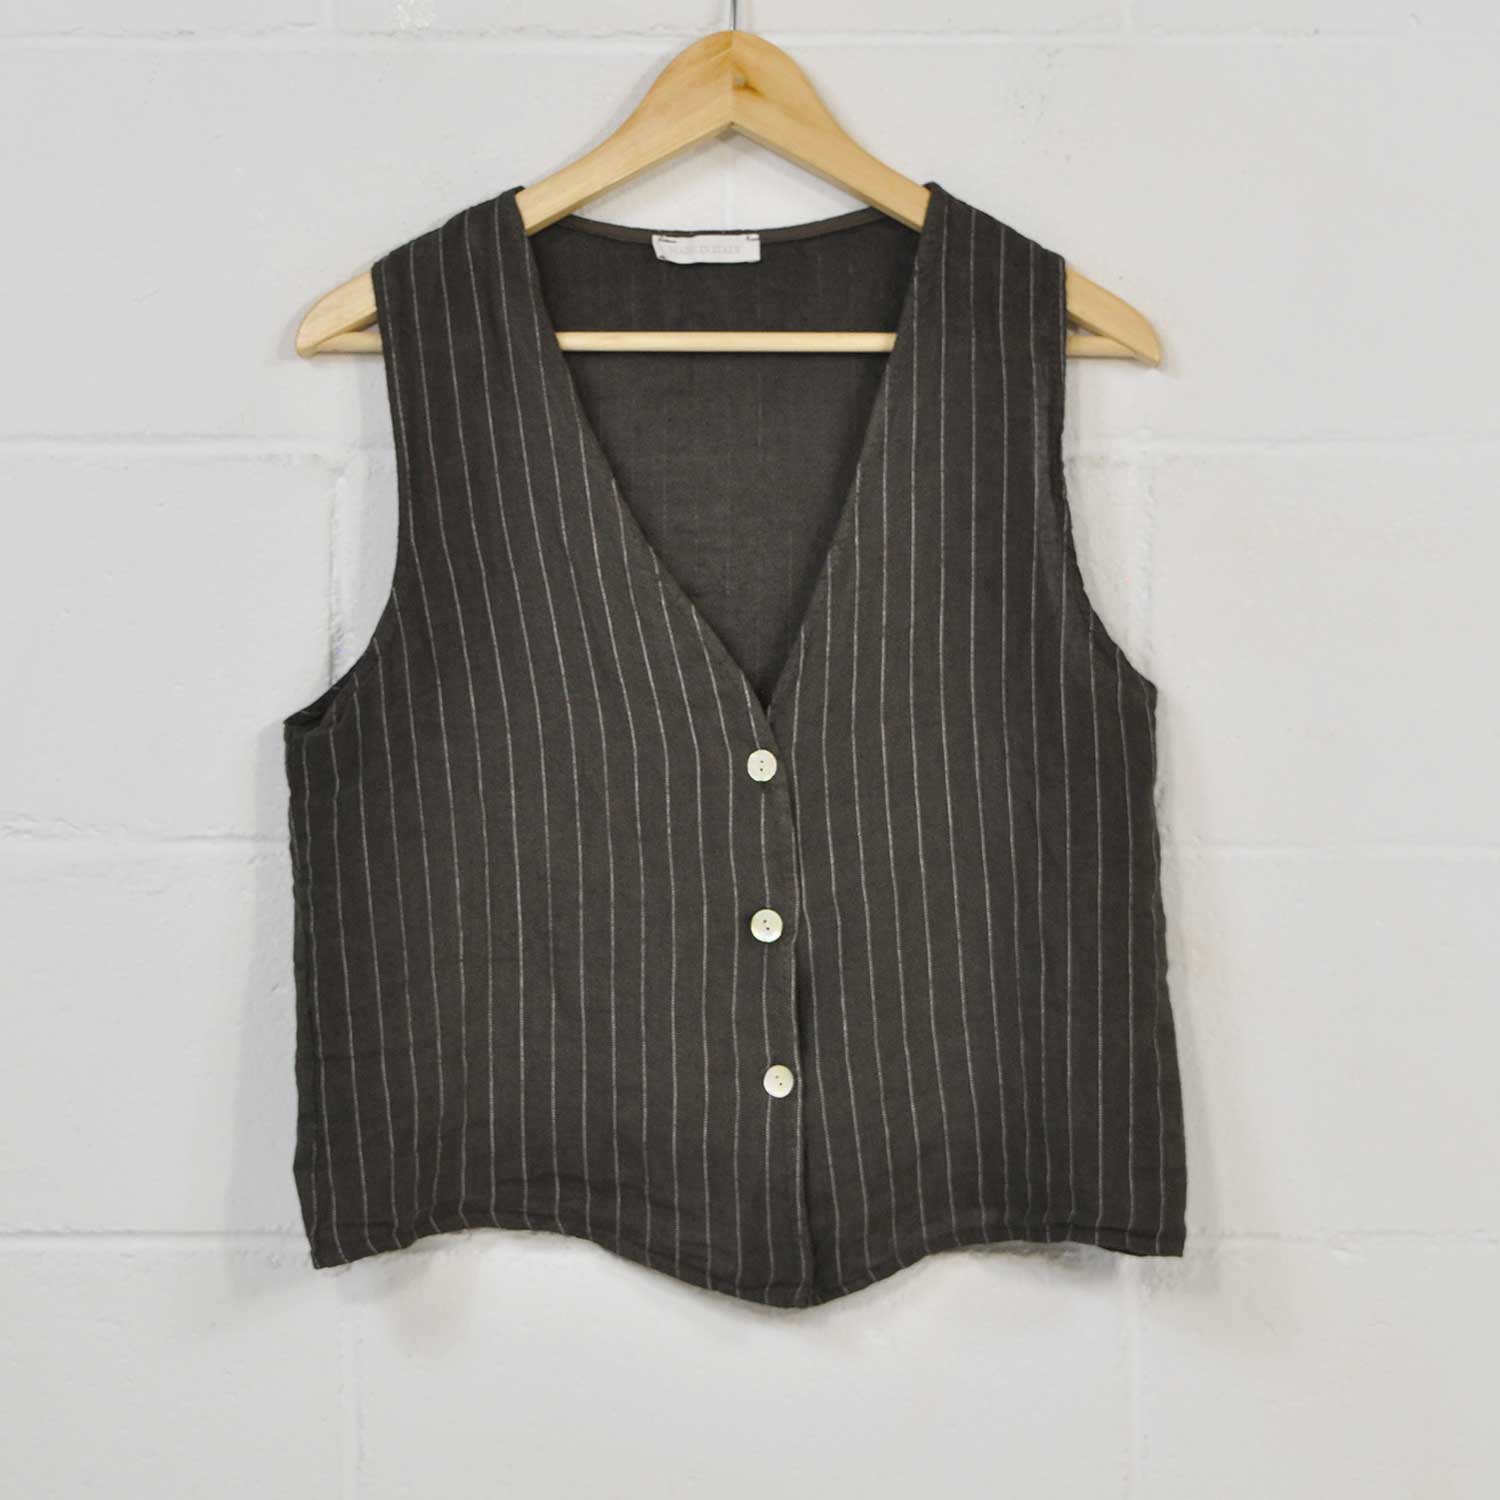 Brown linen stripes vest